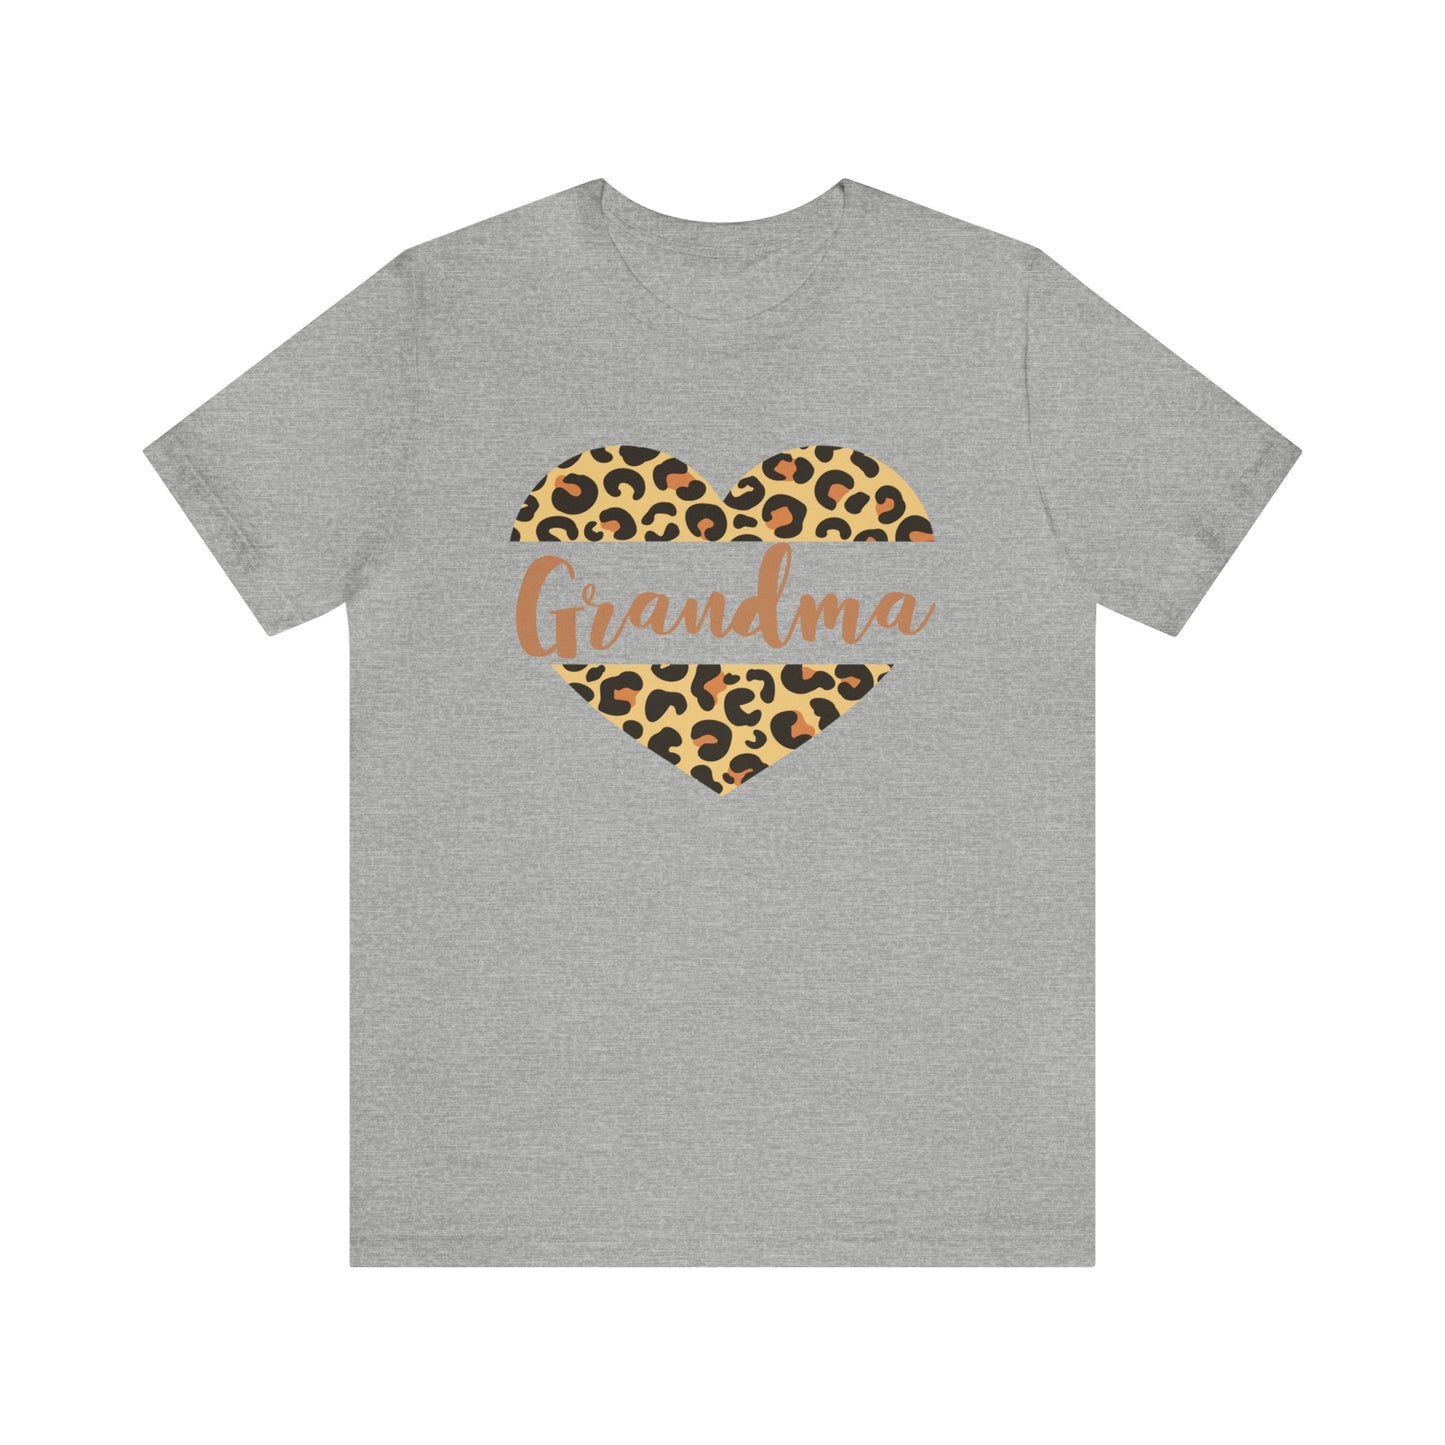 Grandma Leopard Heart  Shirt, Mother's Day Gift for Grandma, Cute Grandma Shirt, Grandma Present, Grandma Birthday